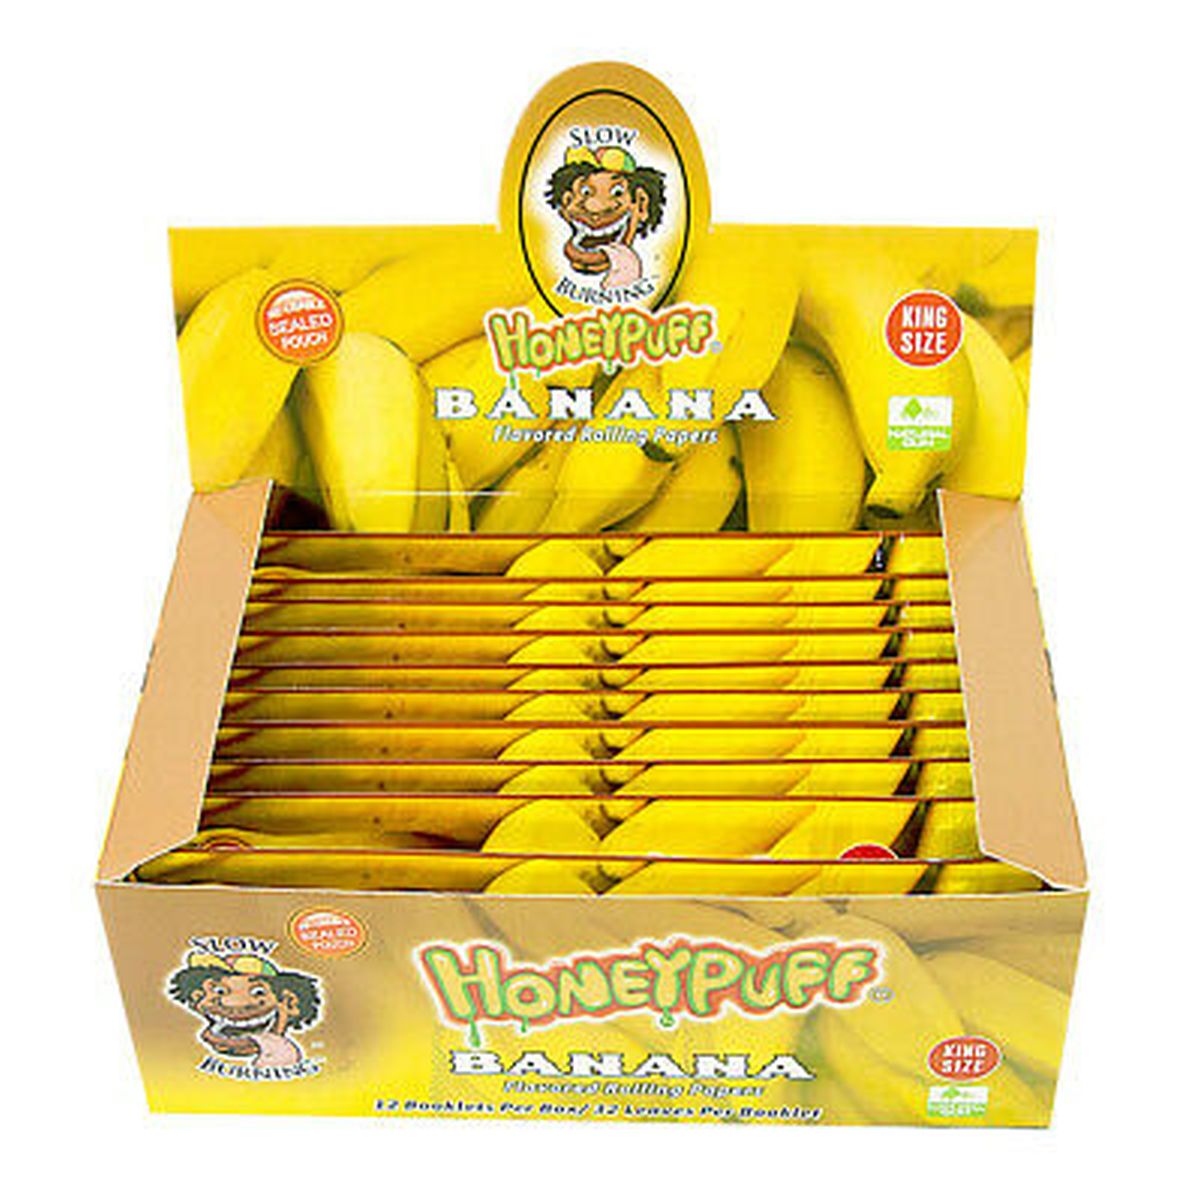 Honeypuff Drehpapier Honeypuff KS Bananen-Aroma 32 Blatt bei www.Tabakring.de kaufen